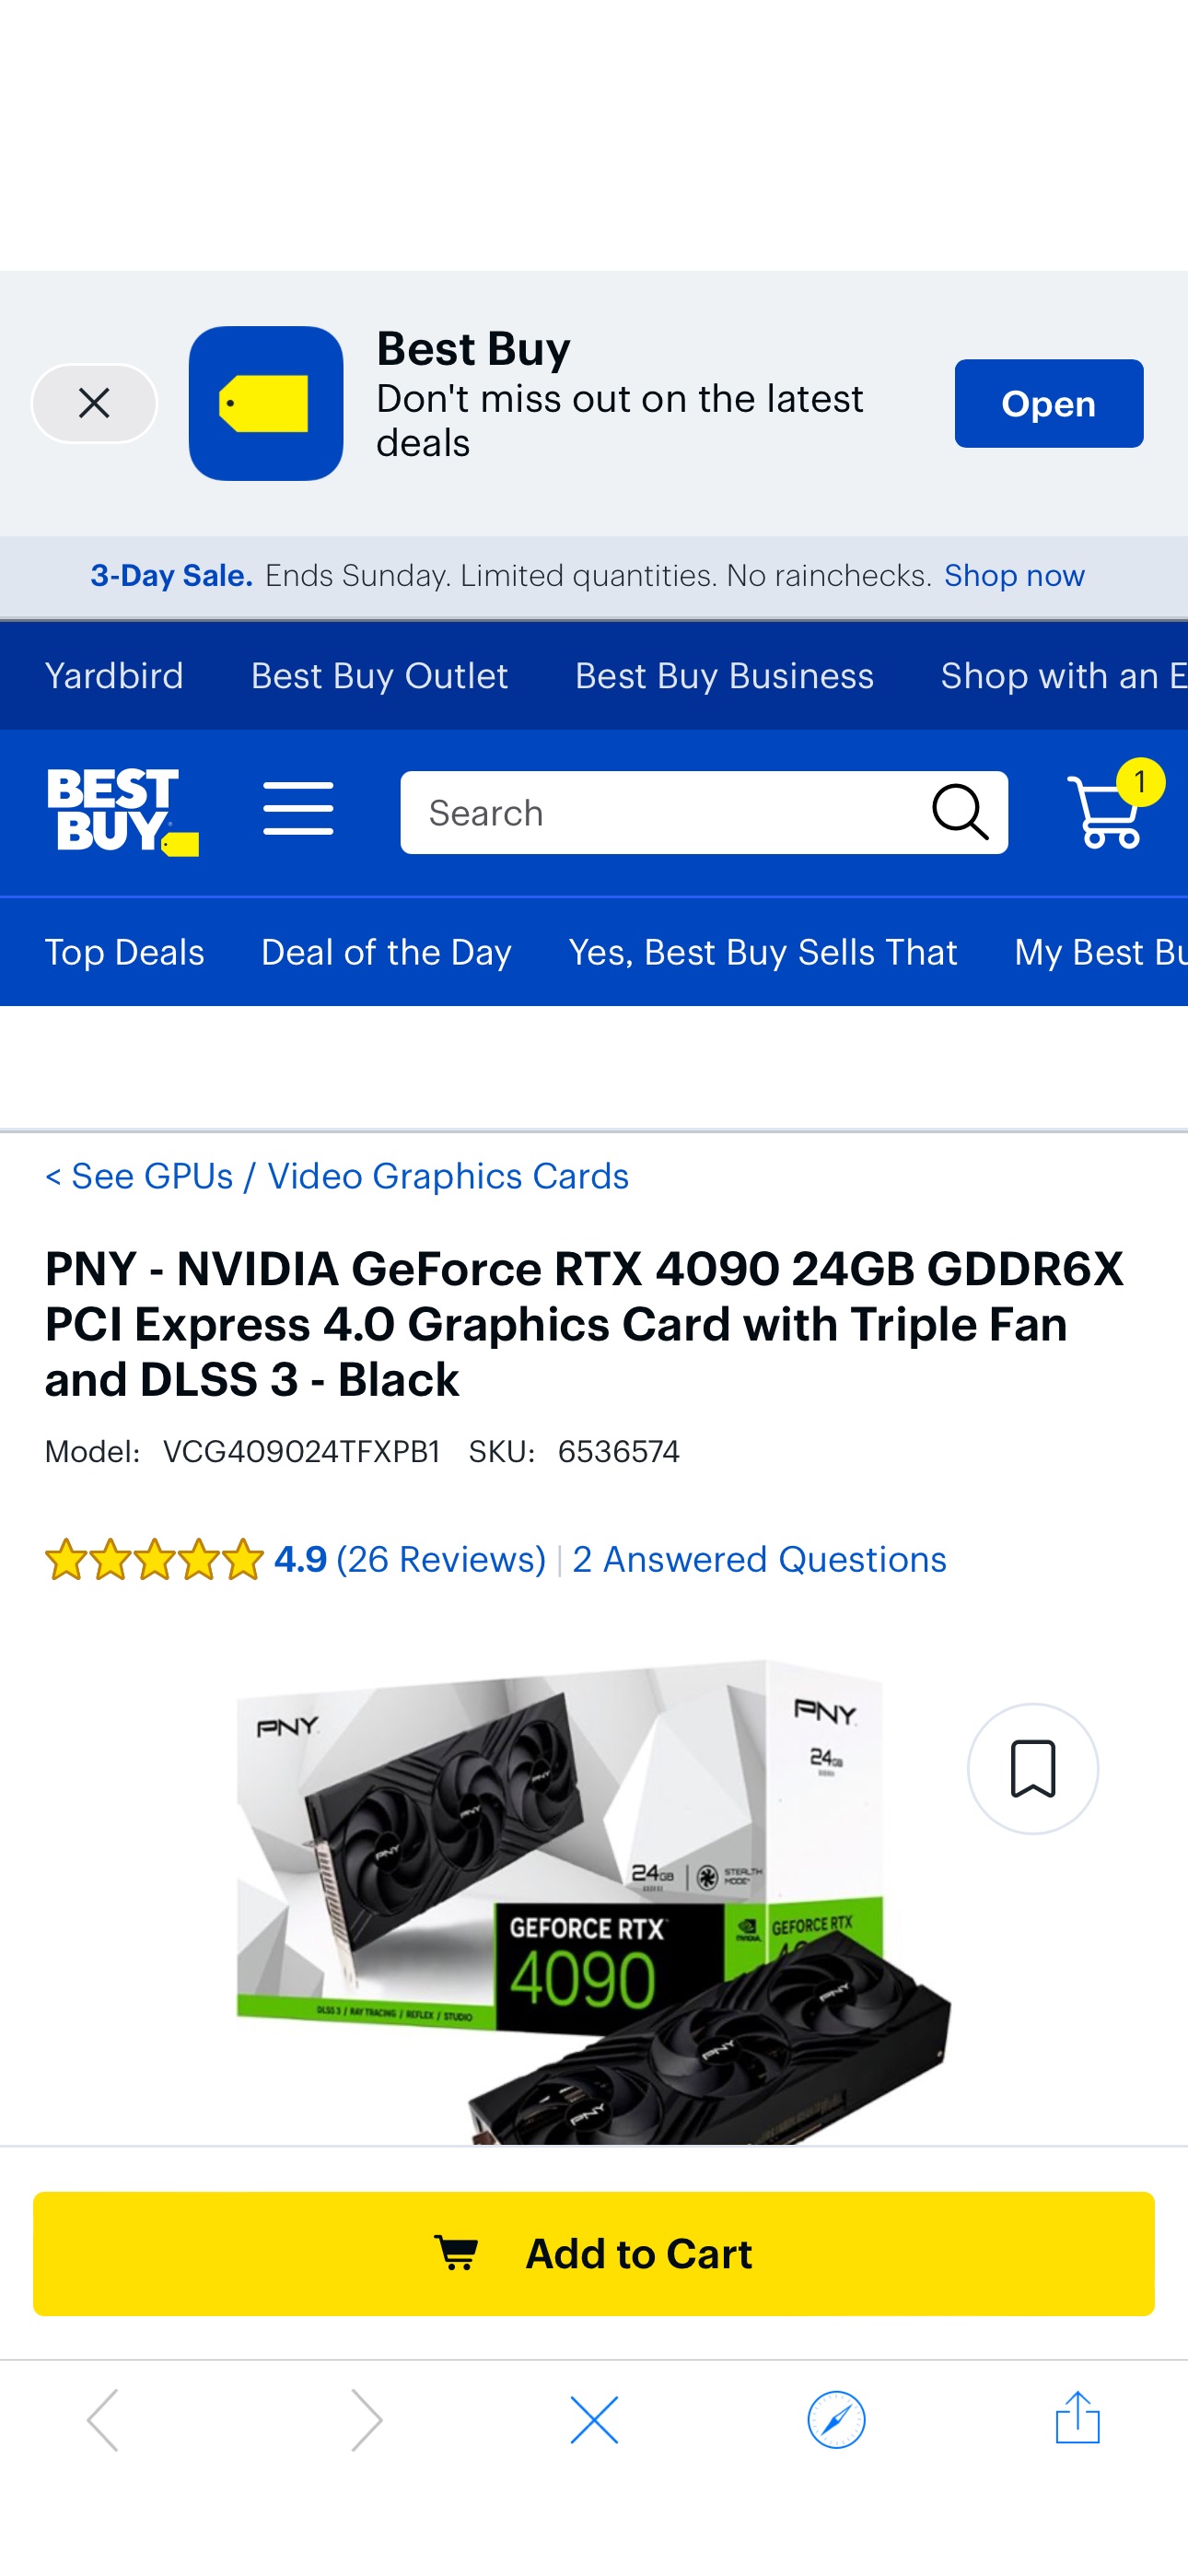 PNY NVIDIA GeForce RTX 4090 24GB GDDR6X PCI Express 4.0 Graphics Card with Triple Fan and DLSS 3 Black VCG409024TFXPB1 - Best Buy